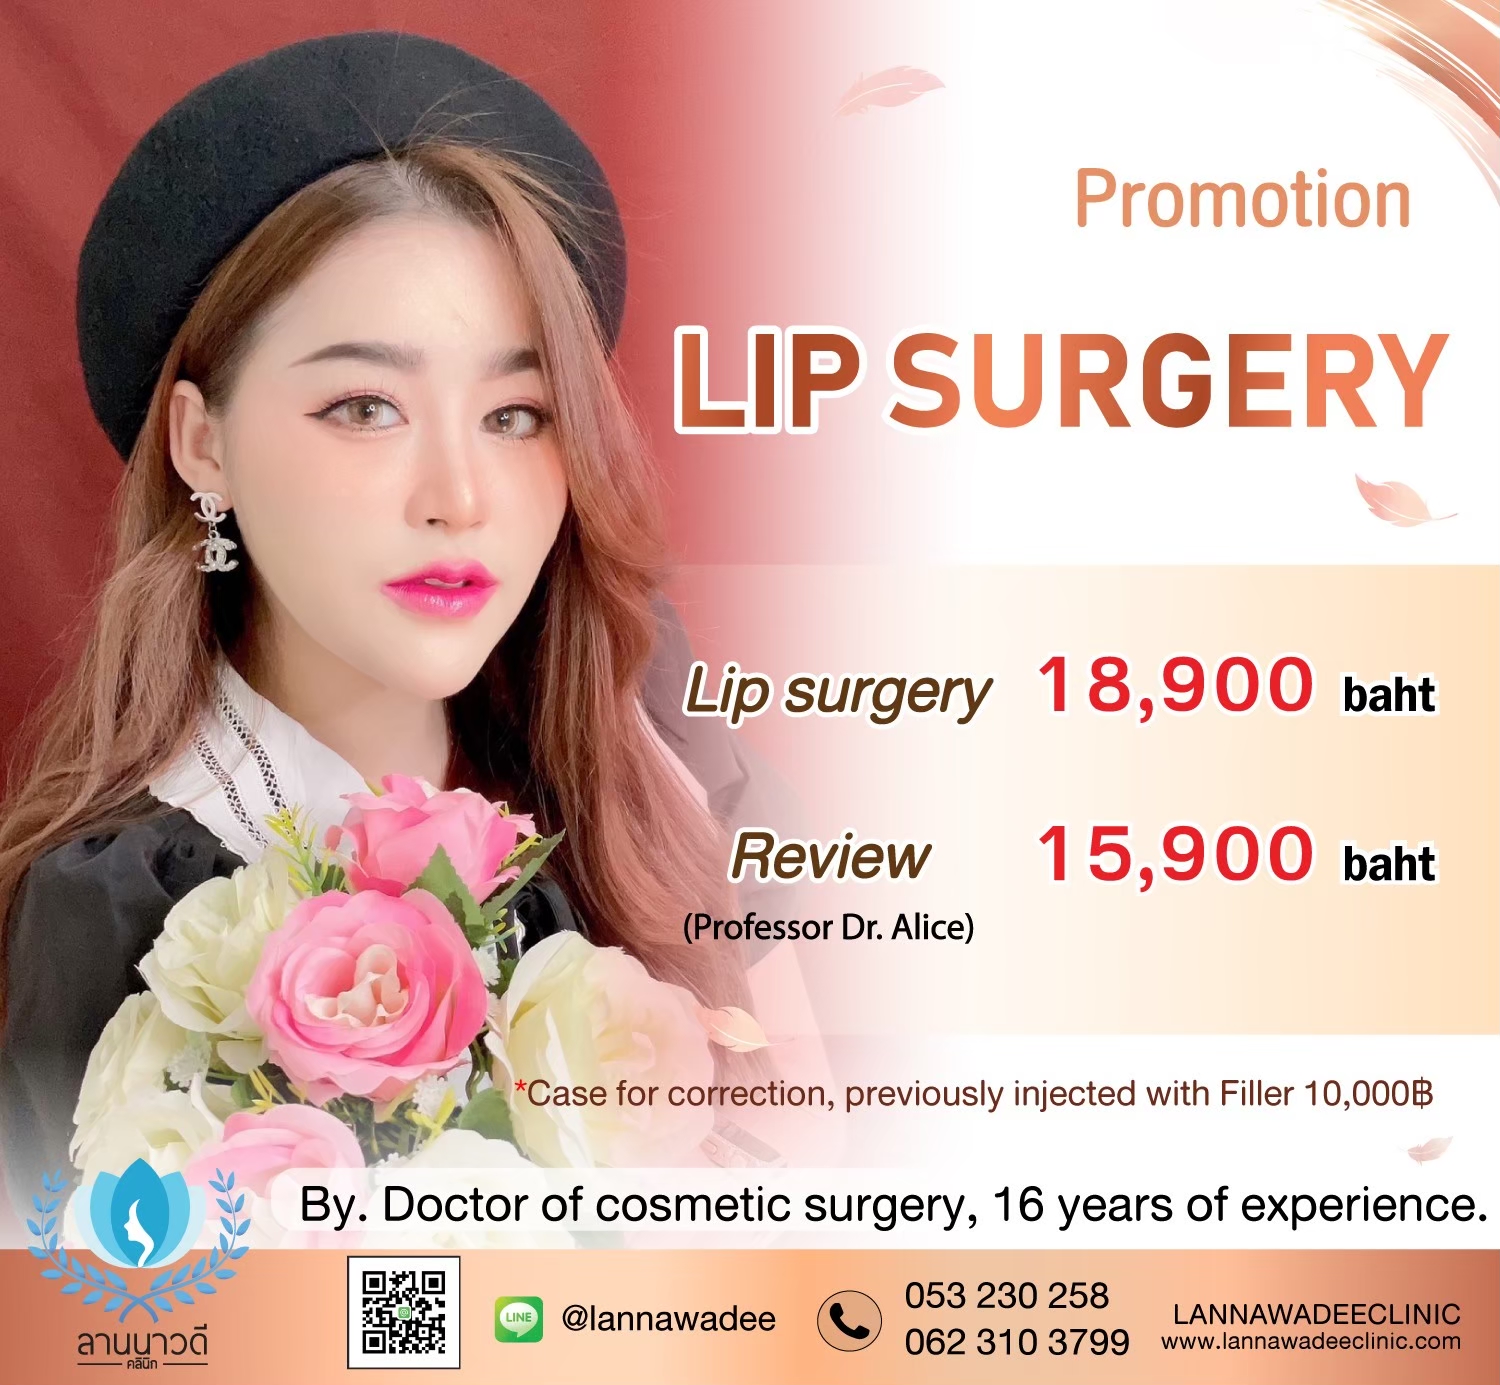 Lip surgery